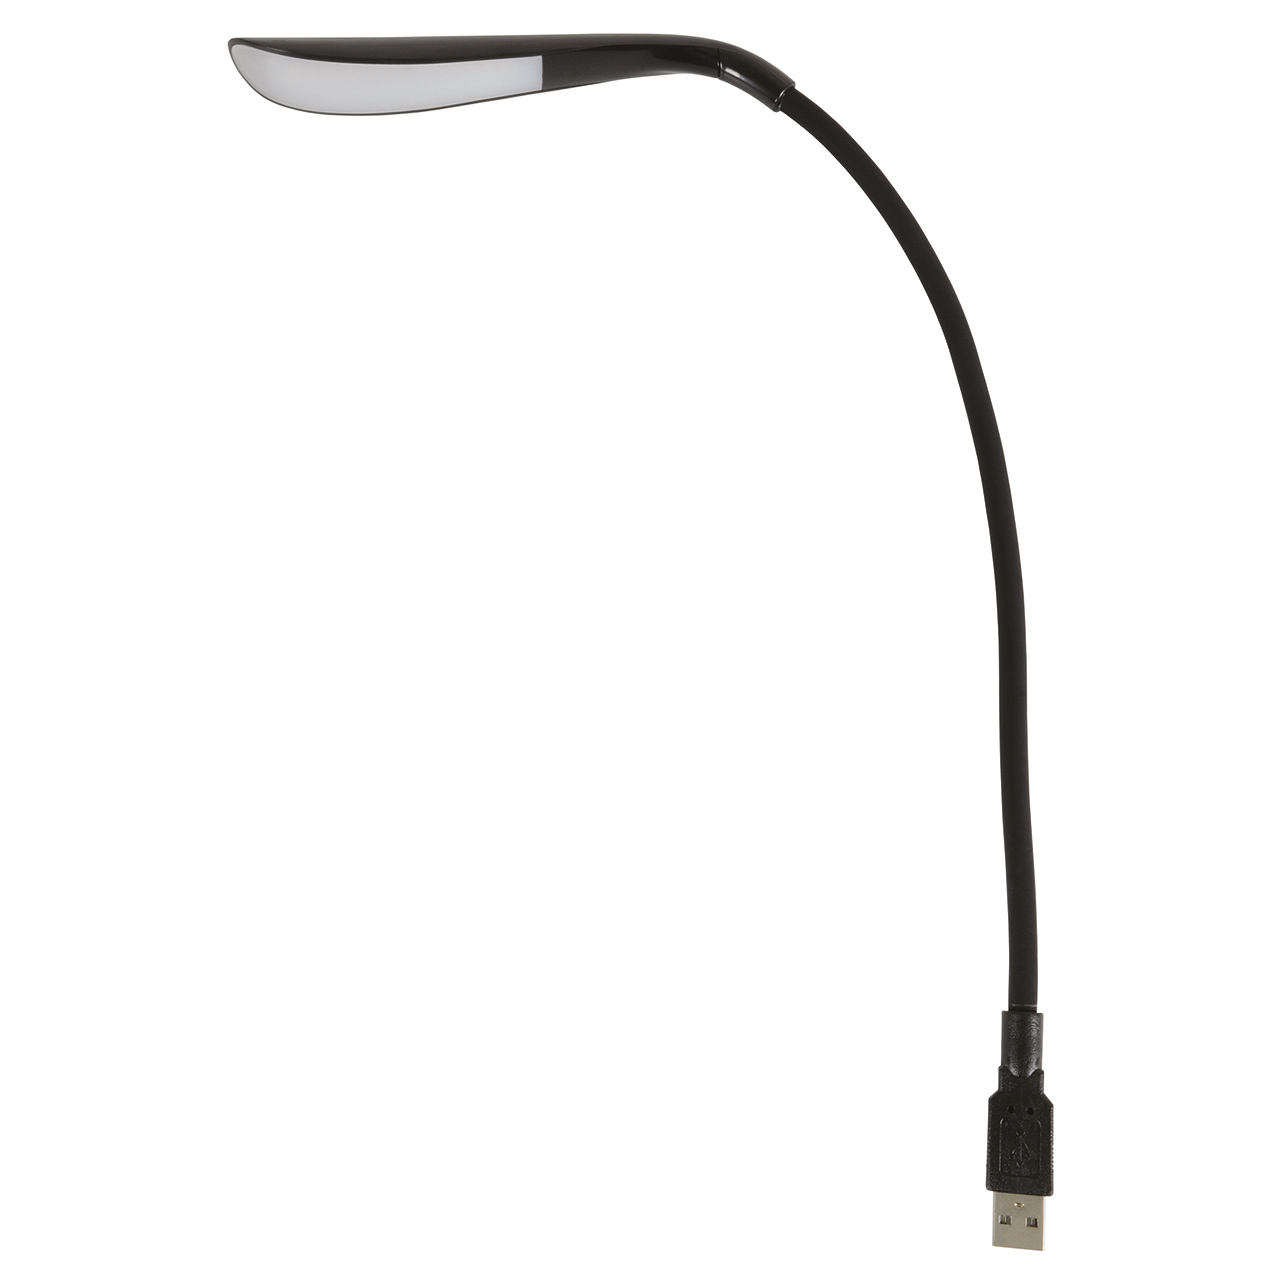 Portable LED USB Flexi-Lamp - Pack of 2